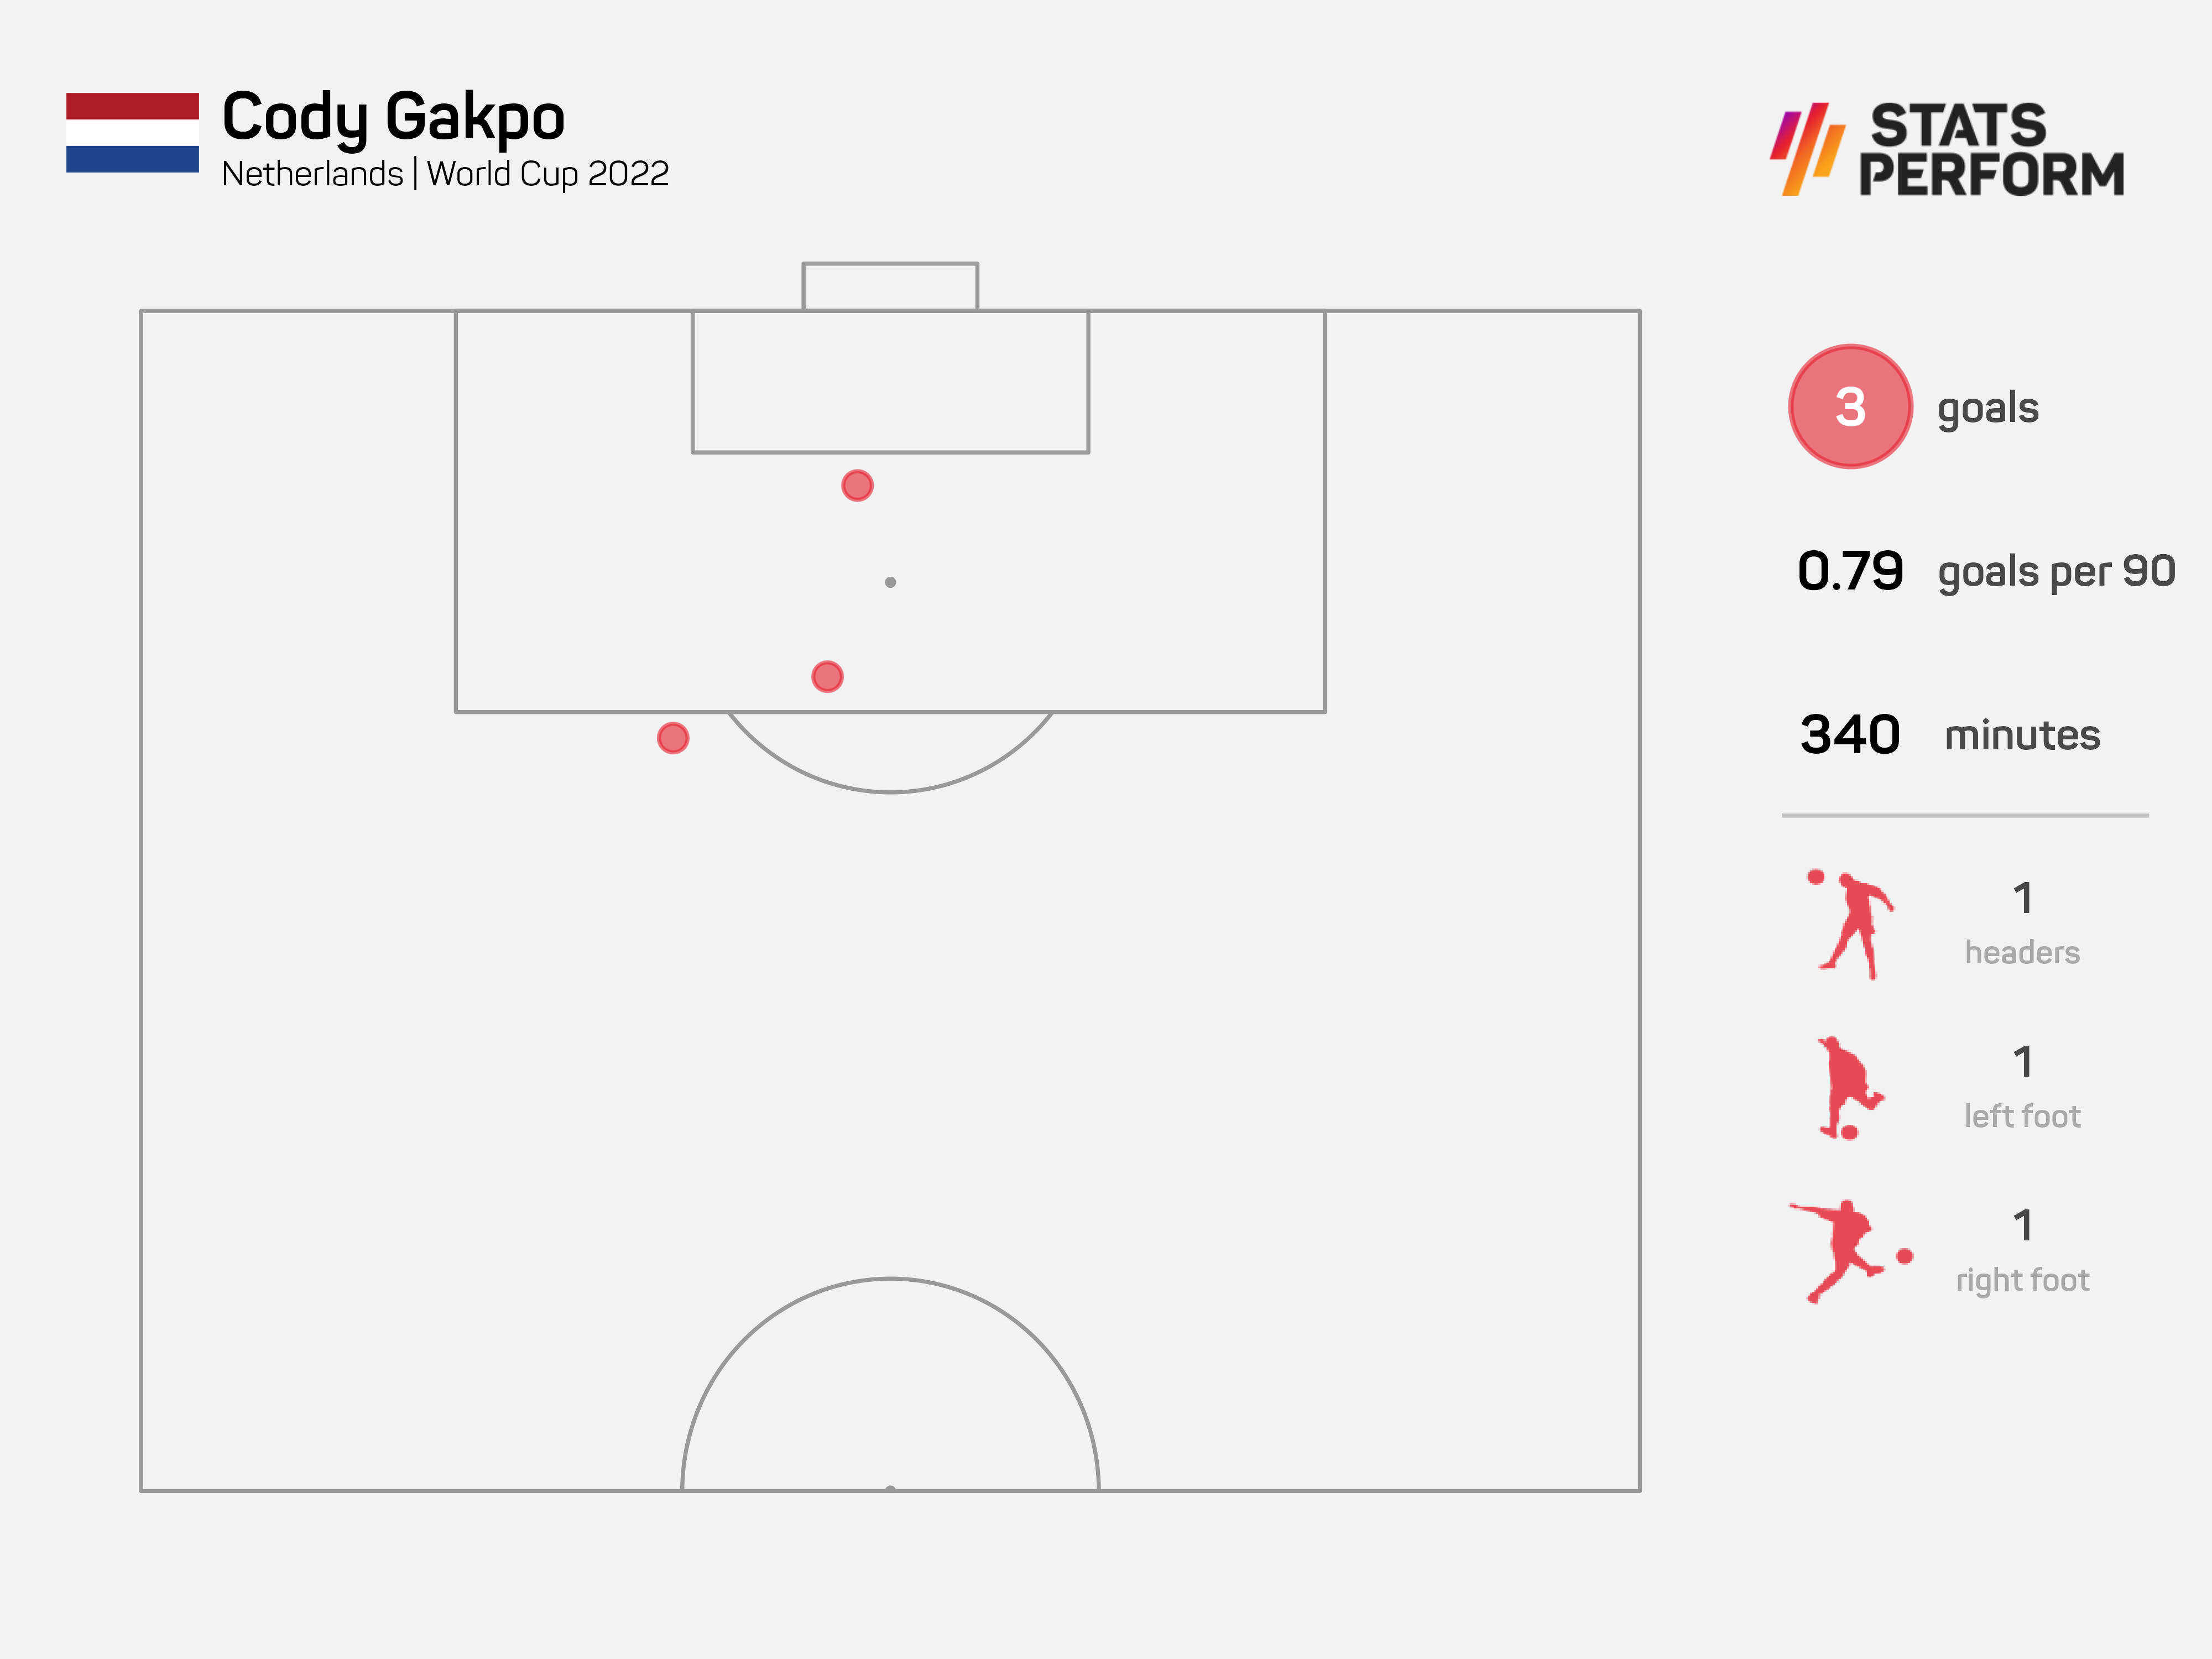 Cody Gakpo has three World Cup goals